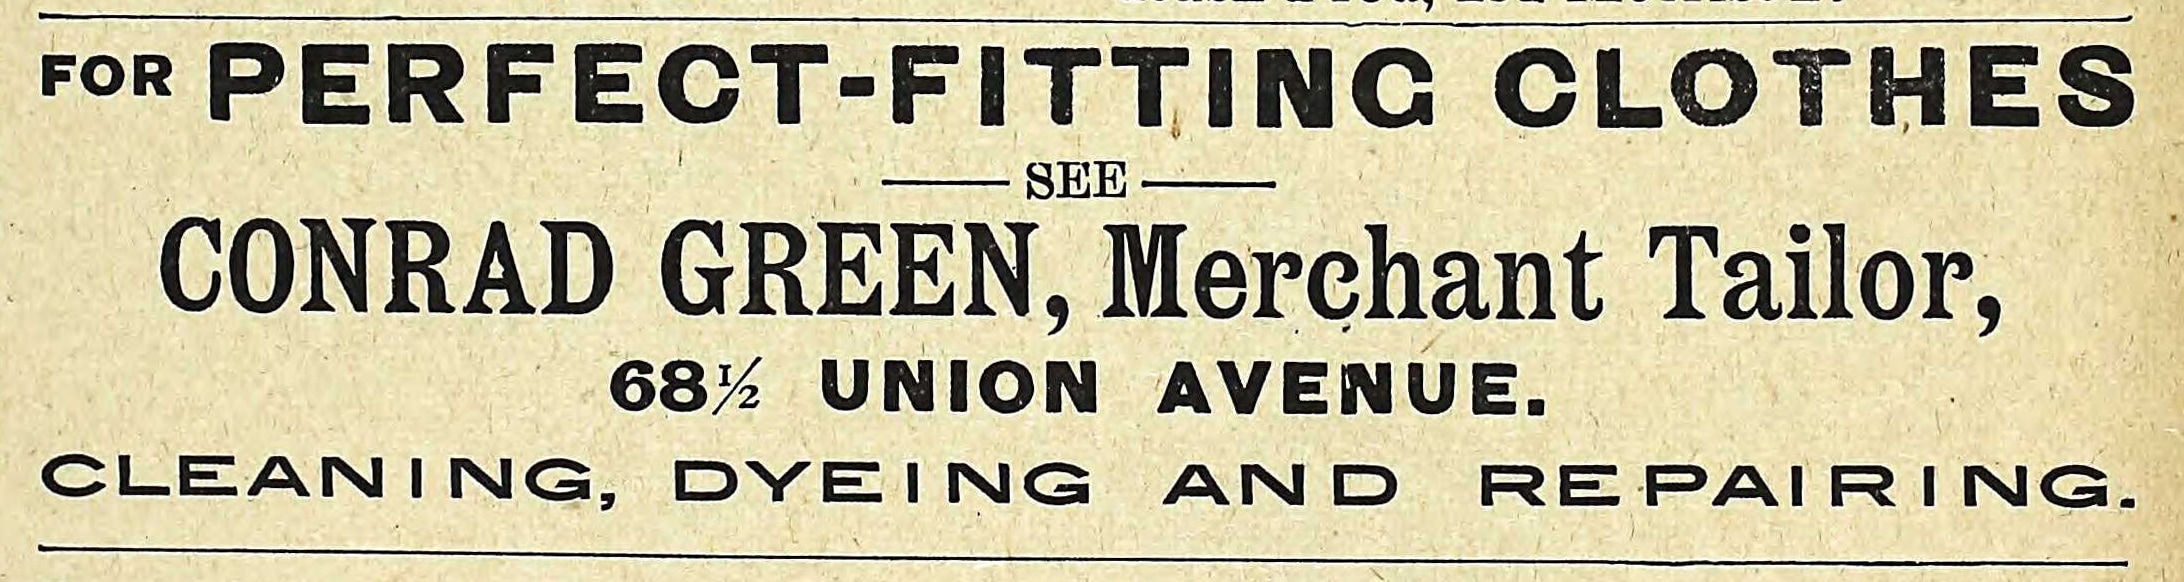 Conrad Green Clothing Advertisement